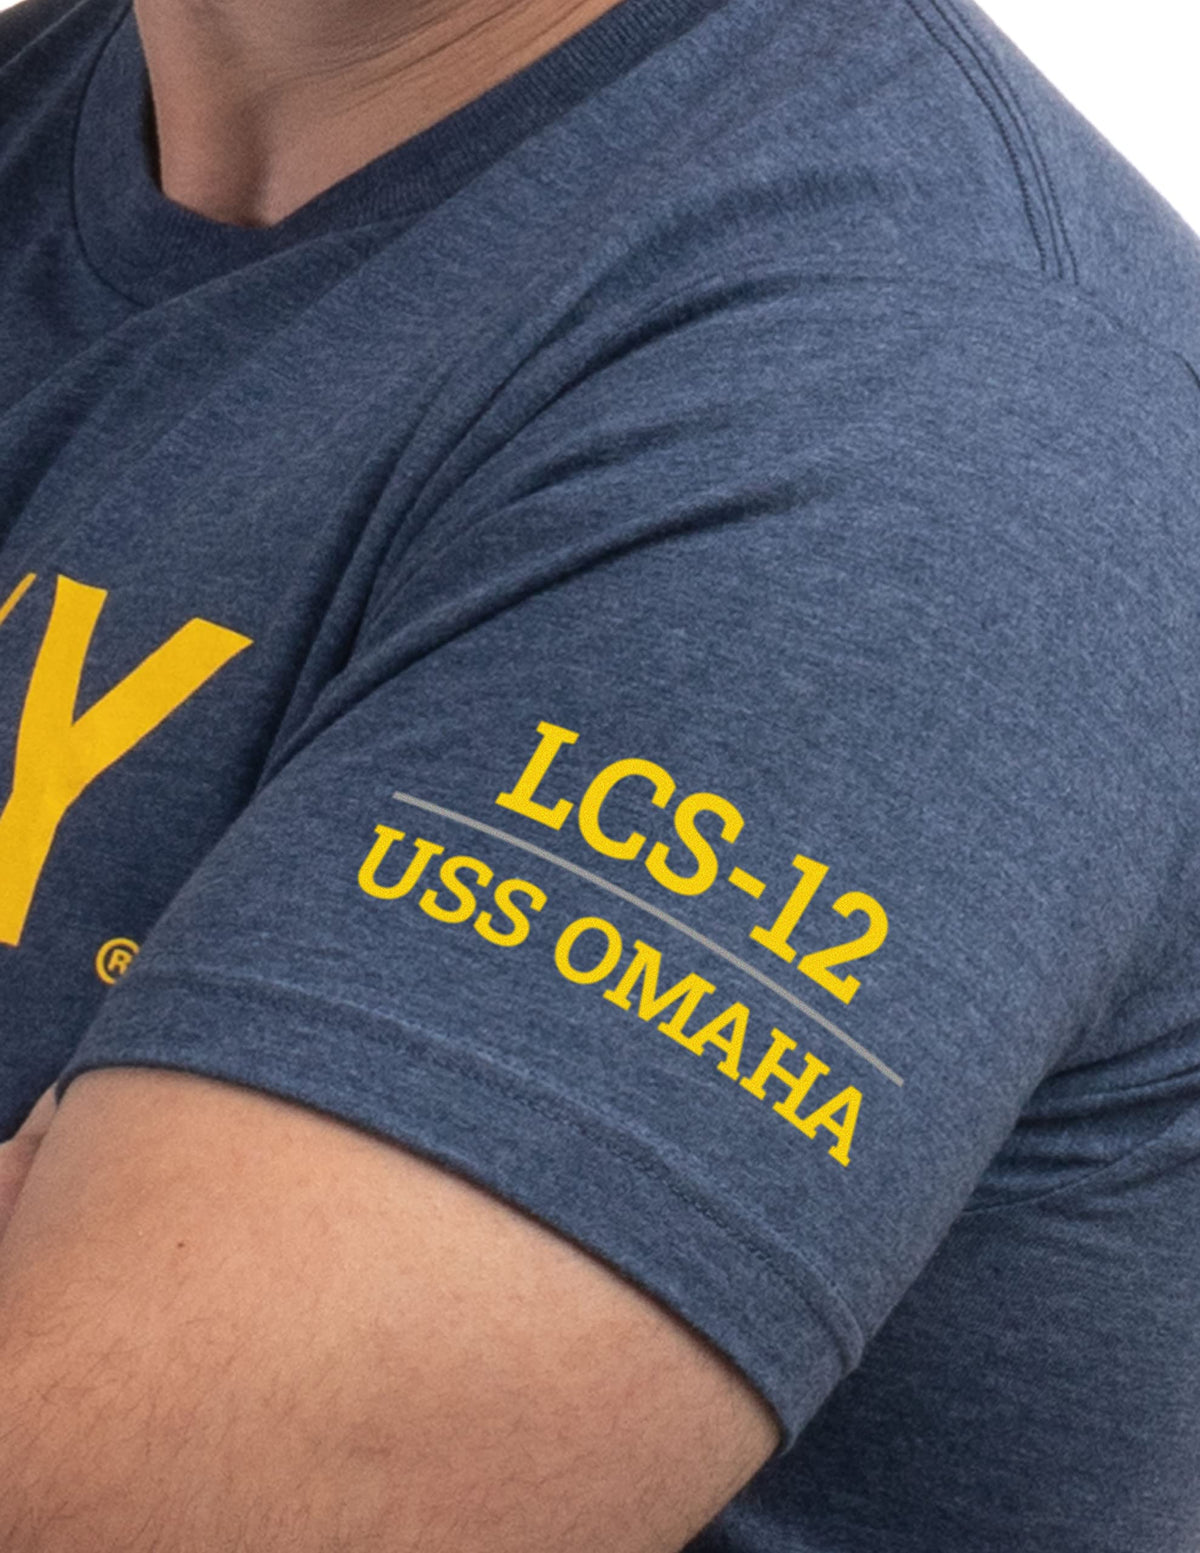 USS Omaha, LCS-12 | U.S. Navy Sailor Veteran USN United States Naval T-shirt for Men Women